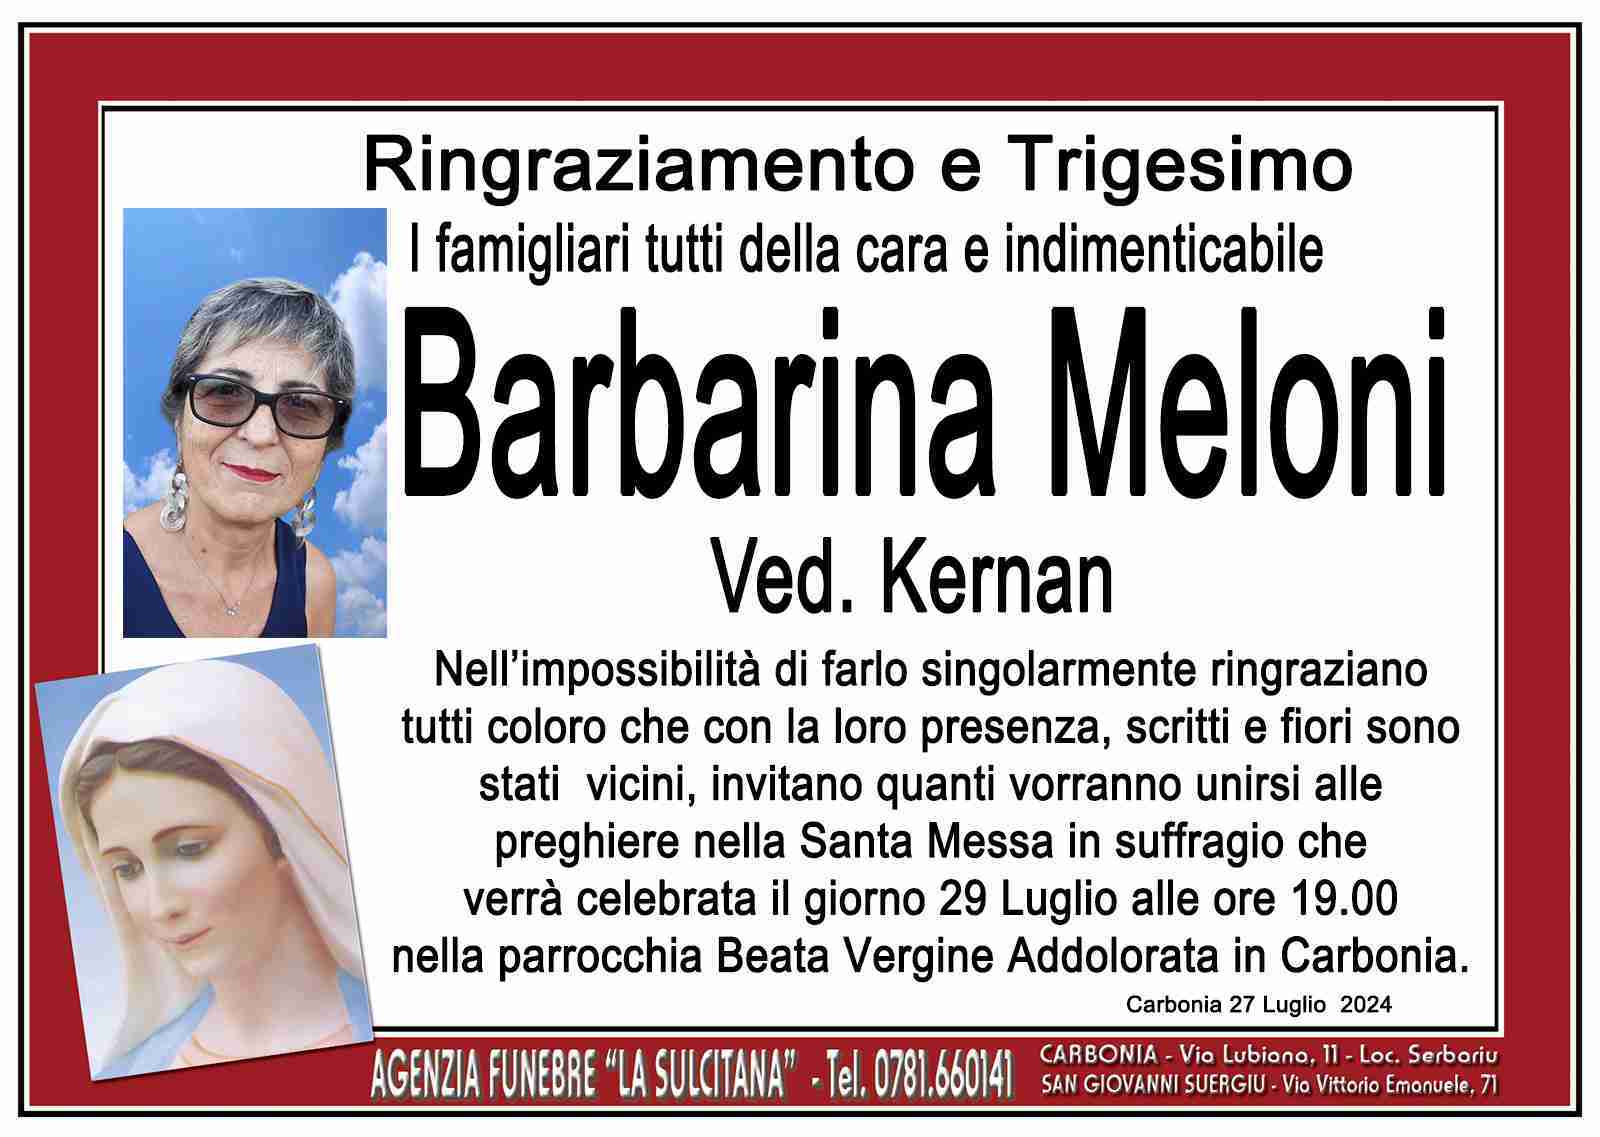 Barbarina Meloni